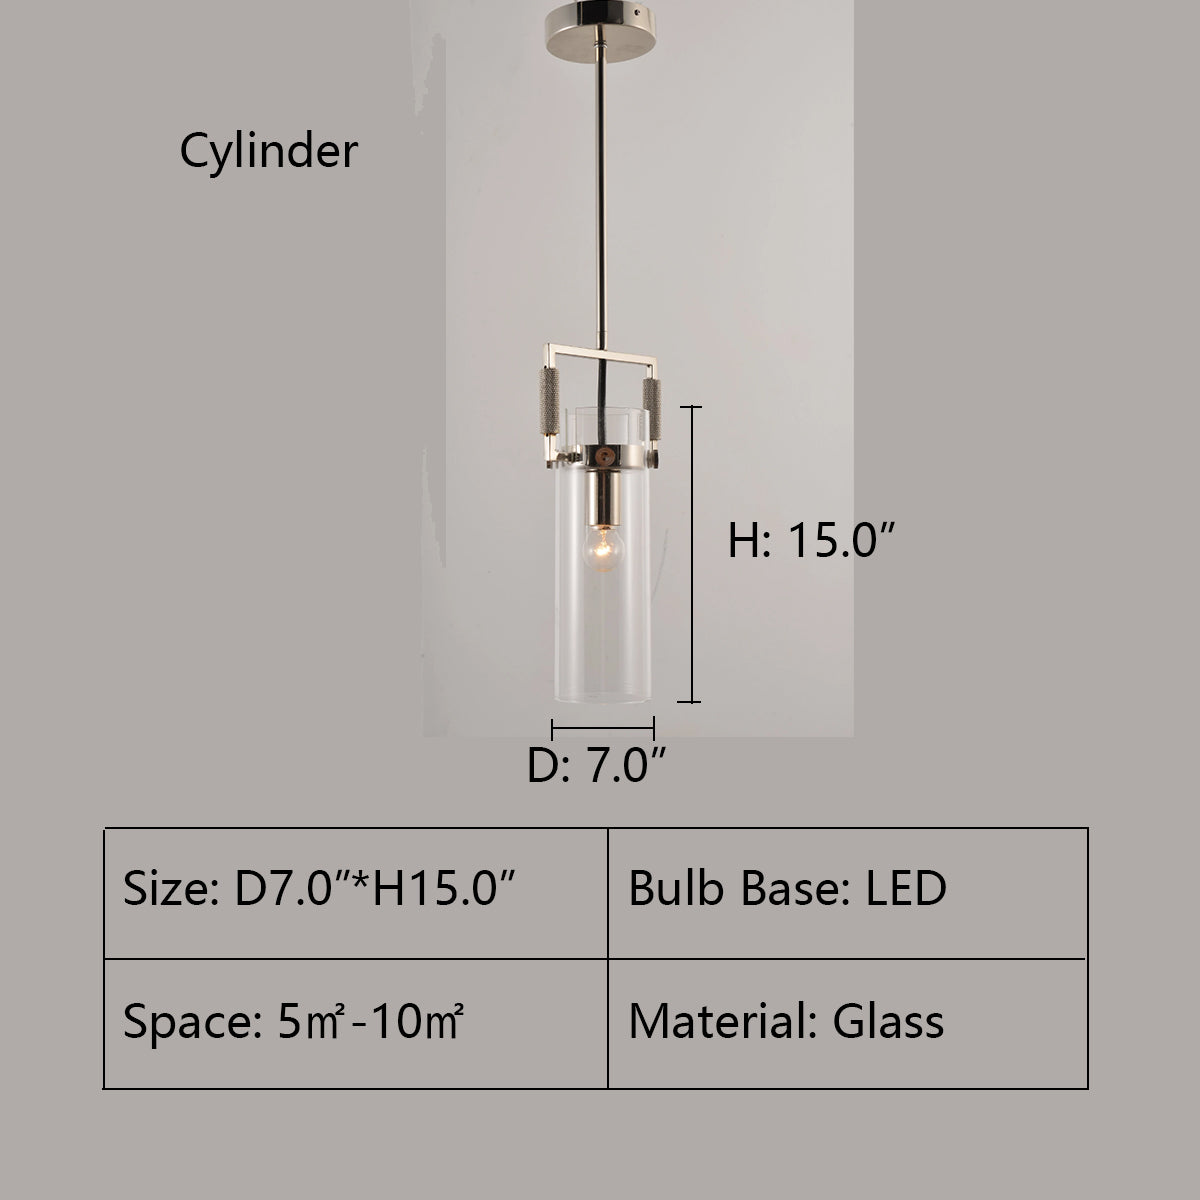 Cylinder: D7.0"*H15.0" MODULE GLASS PENDANT LIGHT,pendant,glass,black iron,metal,ceiling,kitchen island,bar,dining table,long table,dining bar,kitchen bar,island,modern light,glass light